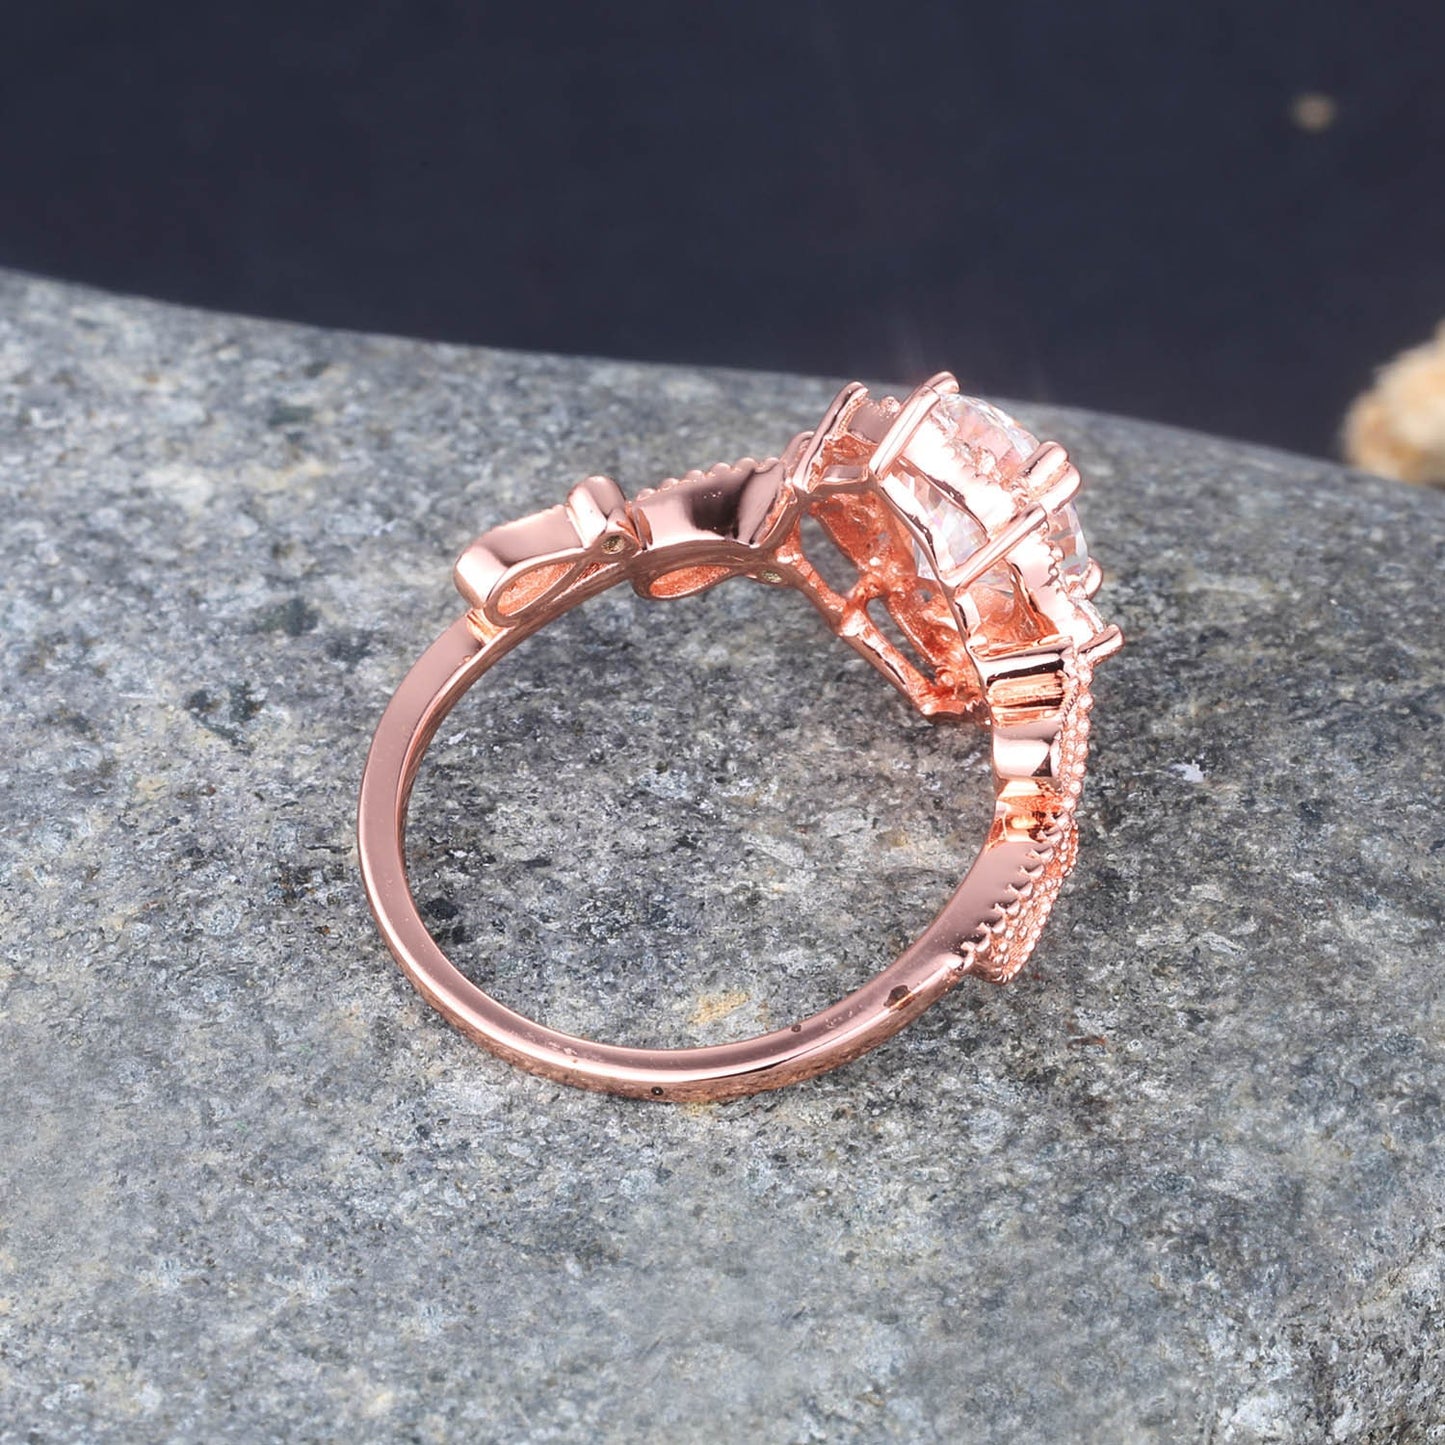 Oval shaped moissanite engagement ring rose gold moissanite ring for women art deco promise bridal wedding jewelry filigree anniversary gift